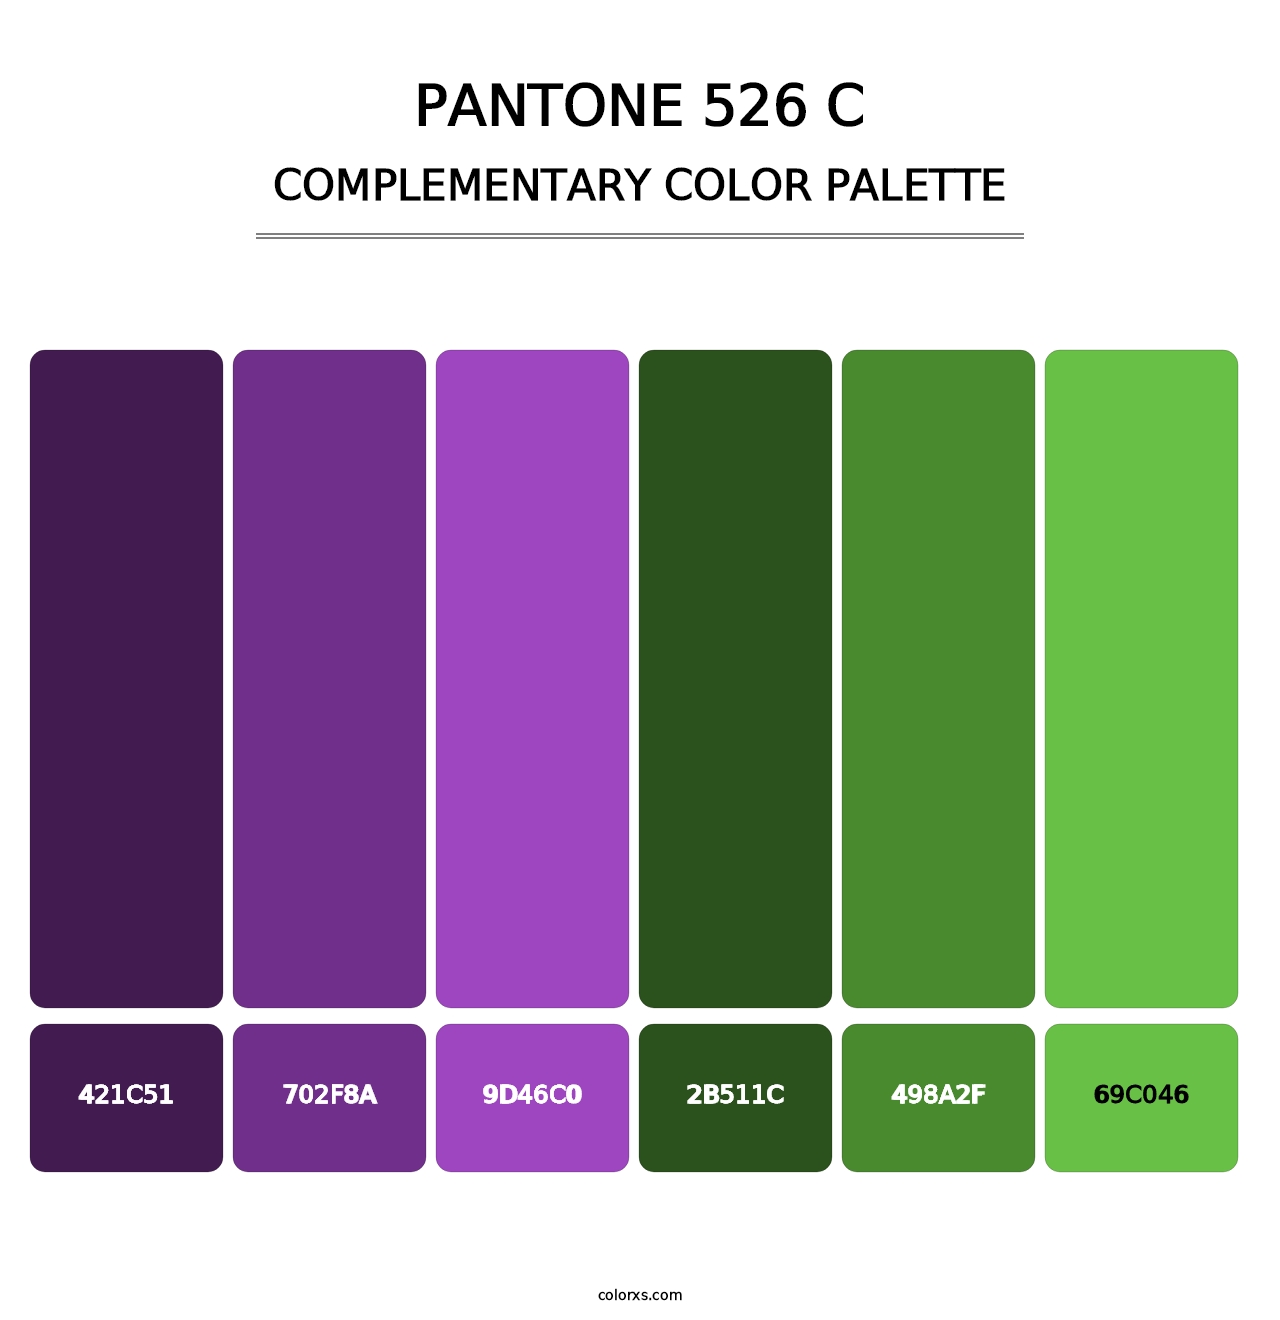 PANTONE 526 C - Complementary Color Palette